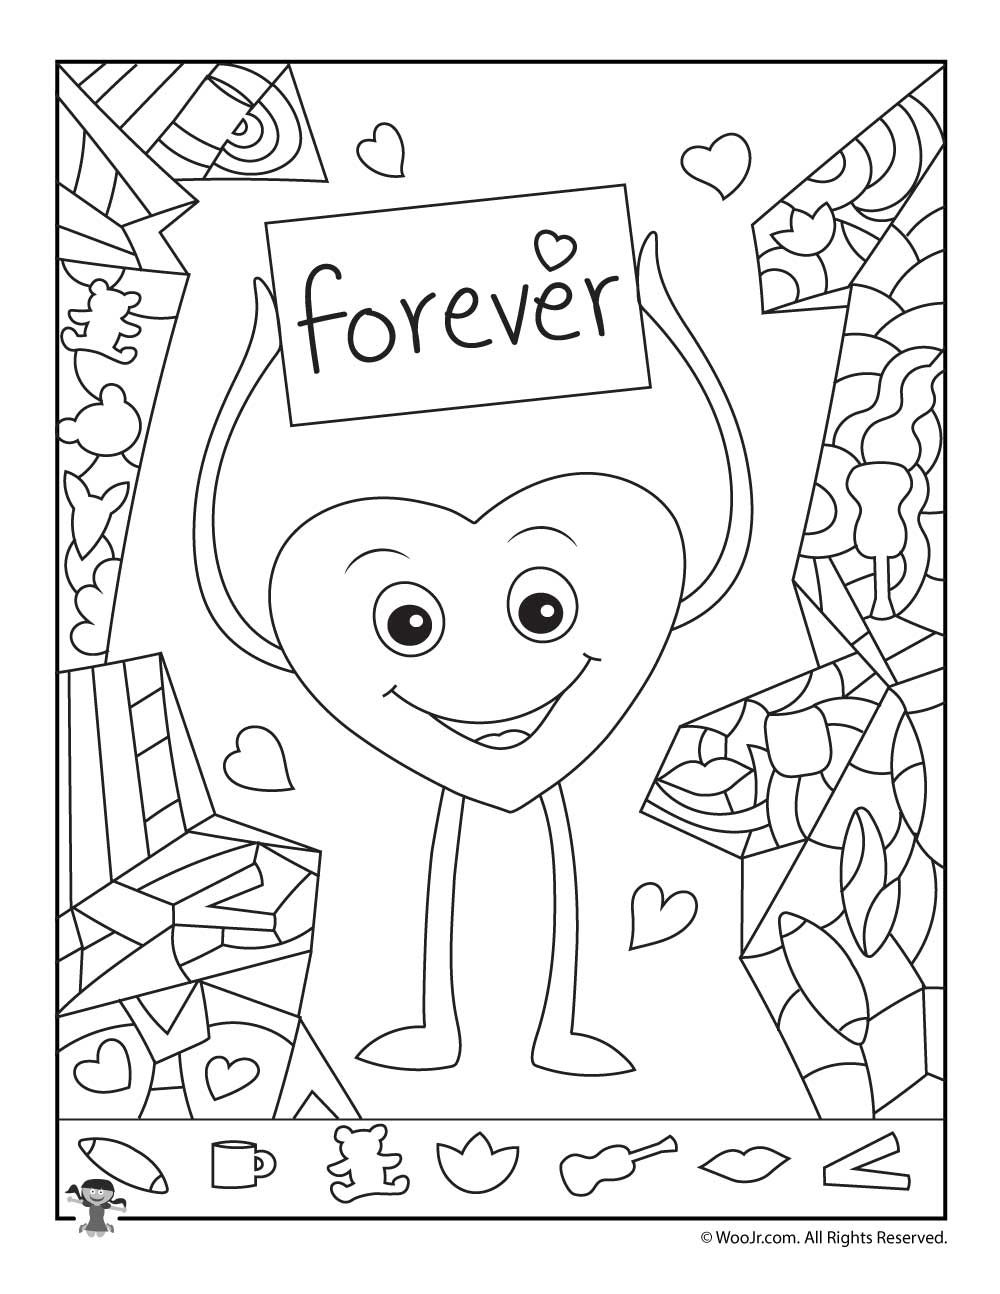 Valentine s Day Hidden Picture Activity Pages Woo Jr Kids Activities Children s Publishing Hidden Pictures Valentine Activities Picture Cards